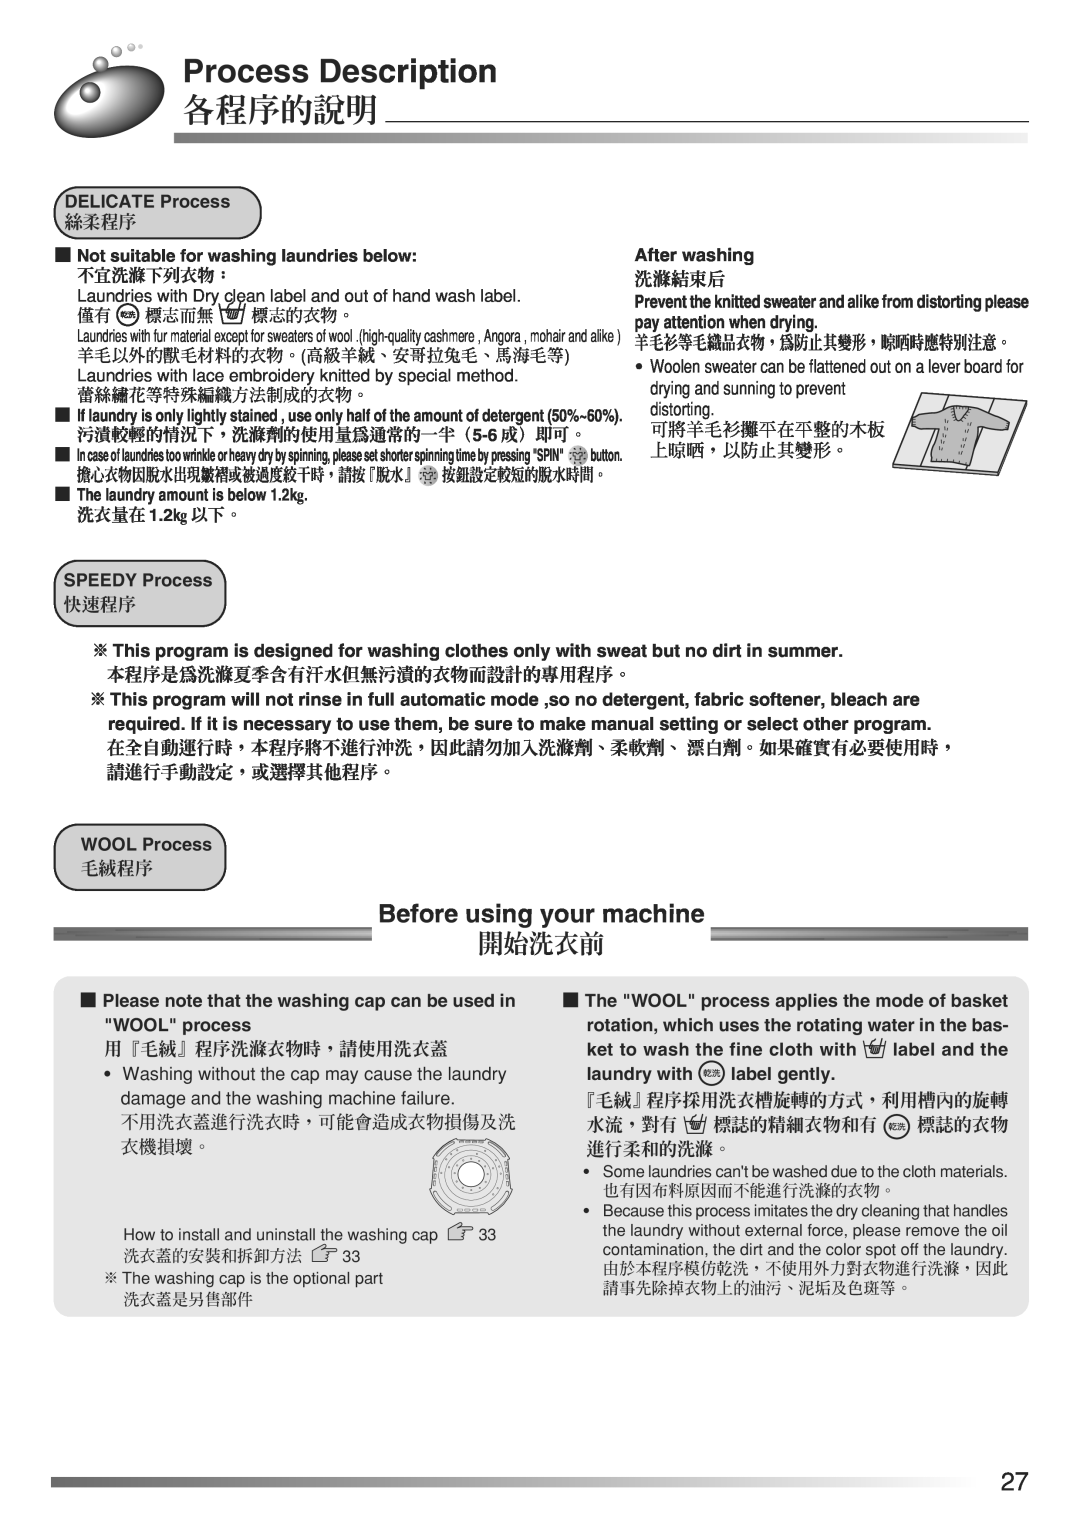 Hitachi AJ-S70KXP Process Description, 各程序的說明, Before using your machine, 開始洗衣前, DELICATE Process, 絲柔程序, 不宜洗滌下列衣物：, 洗滌結束后 